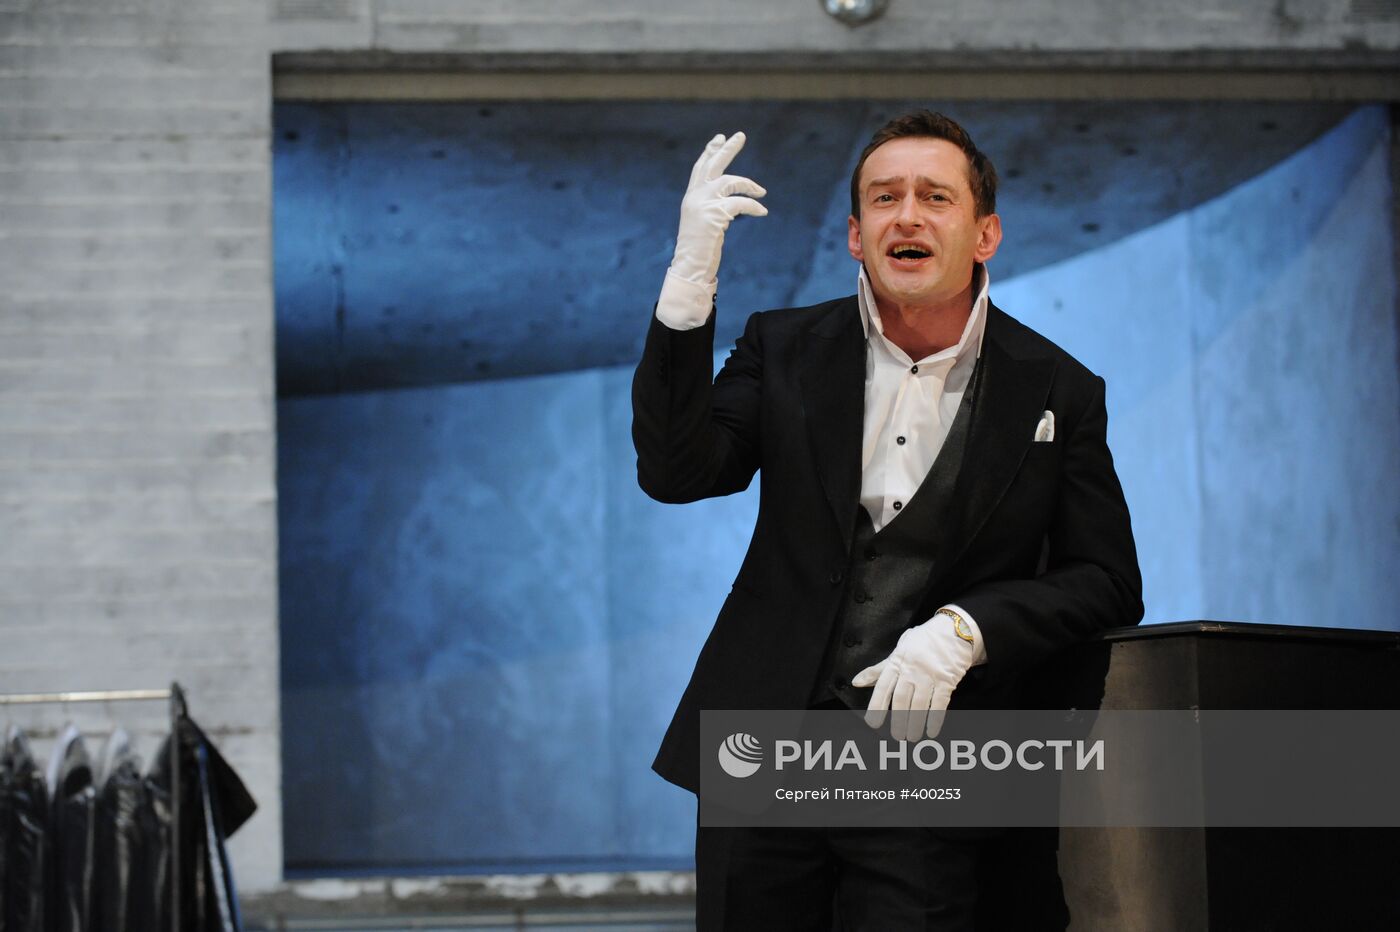 "Трехгрошовая опера" на сцене МХТ им. А.П. Чехова